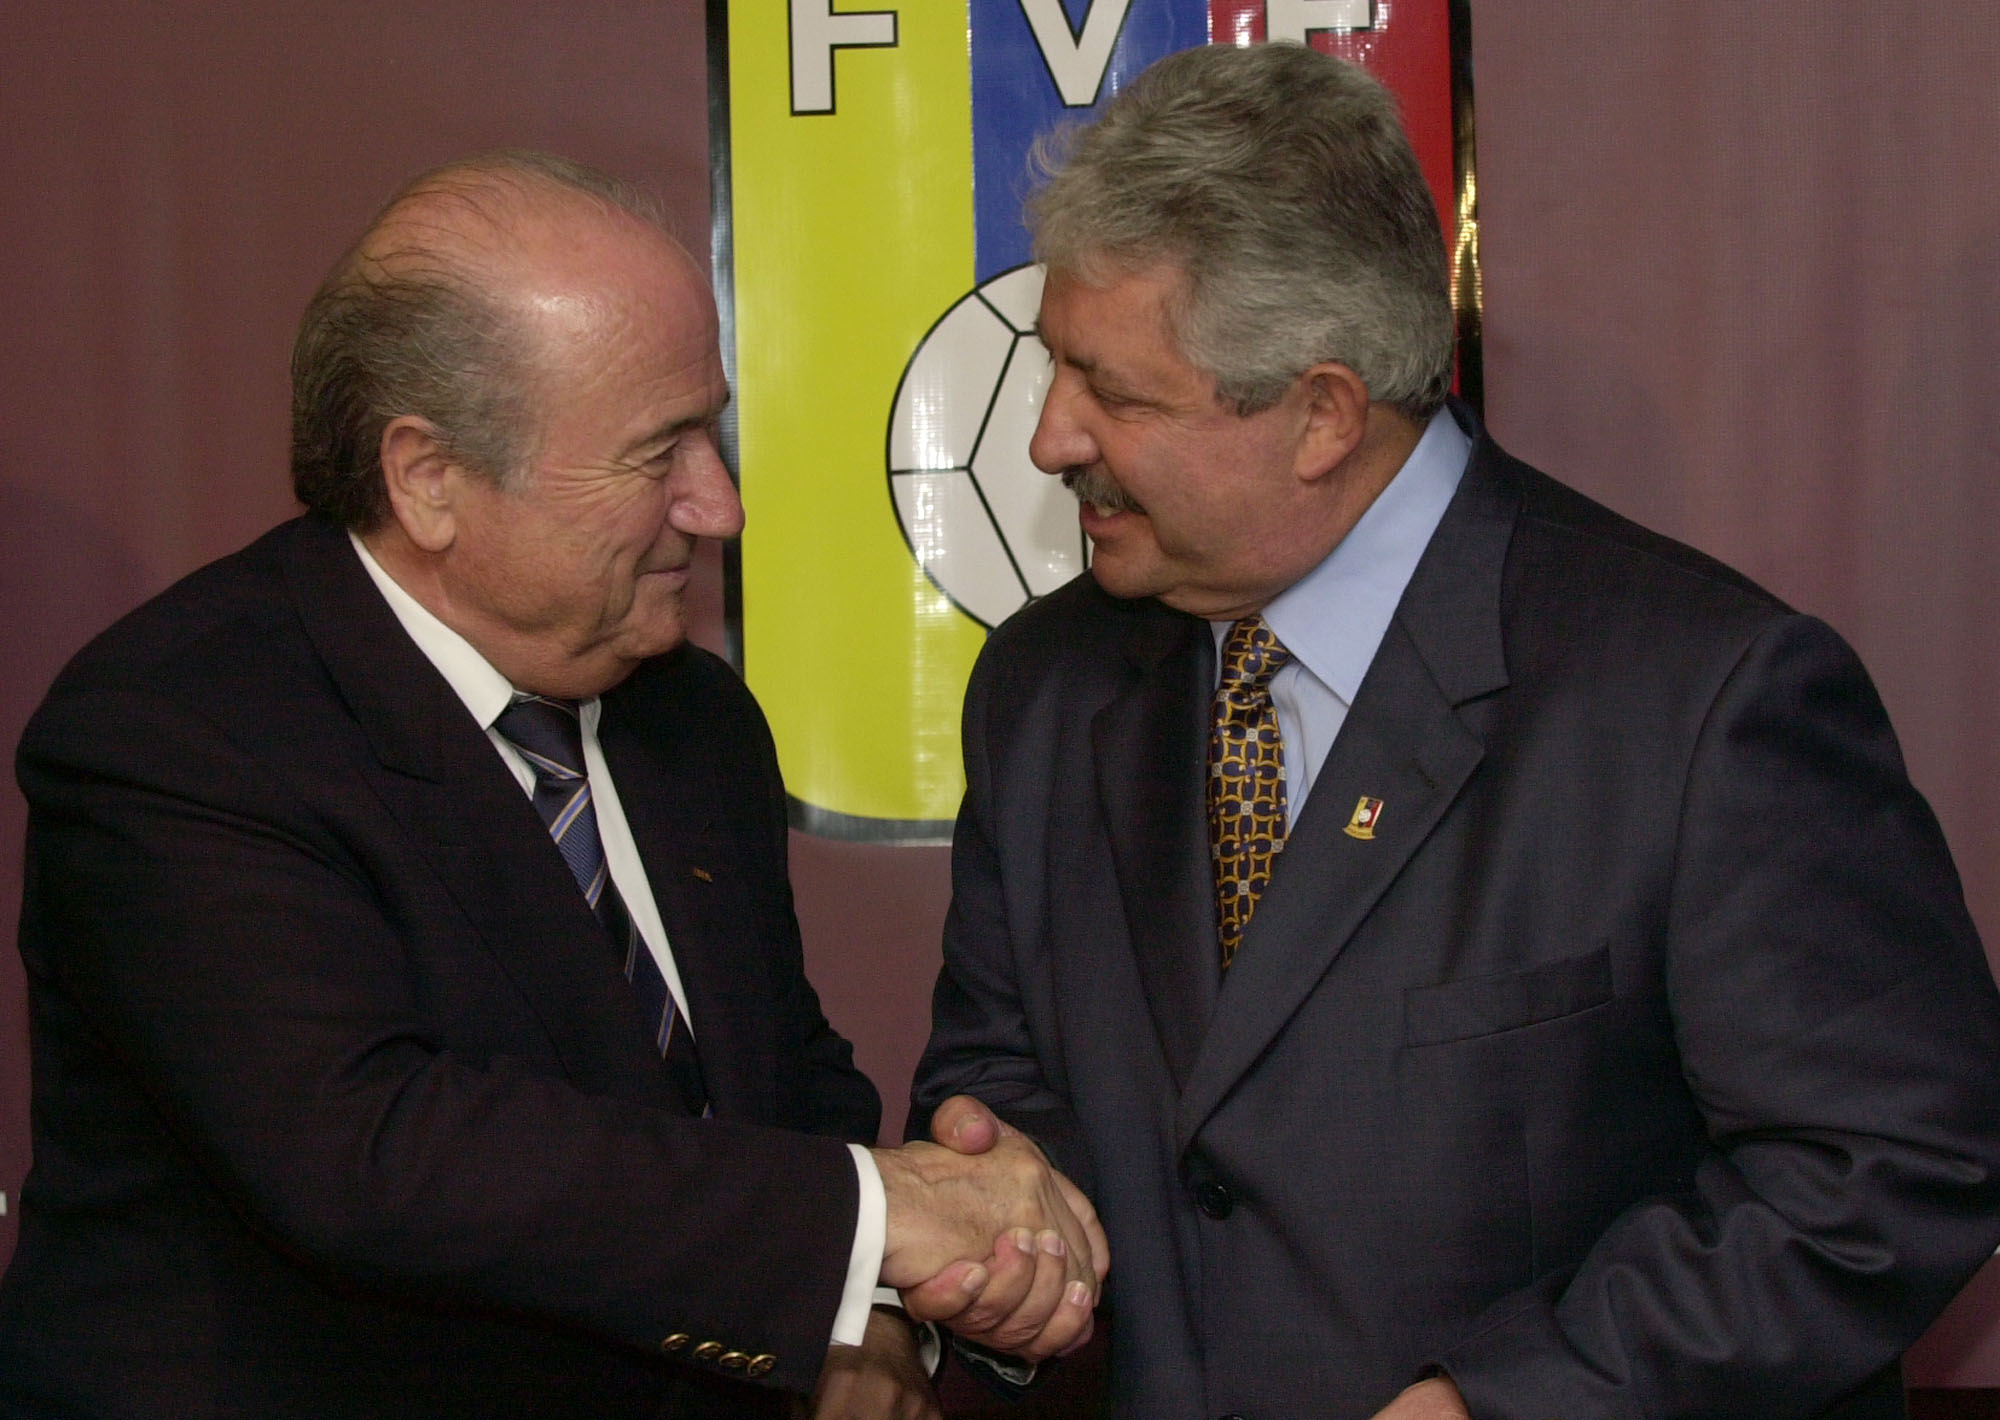 Joseph Blatter, President of the FIFA, left, shakes hands with the President of the Venezuelan Soccer Federation, Rafael Esquivel, in Caracas, Venezuela, Nov. 8, 2004 (Leslie Mazoch—AP)